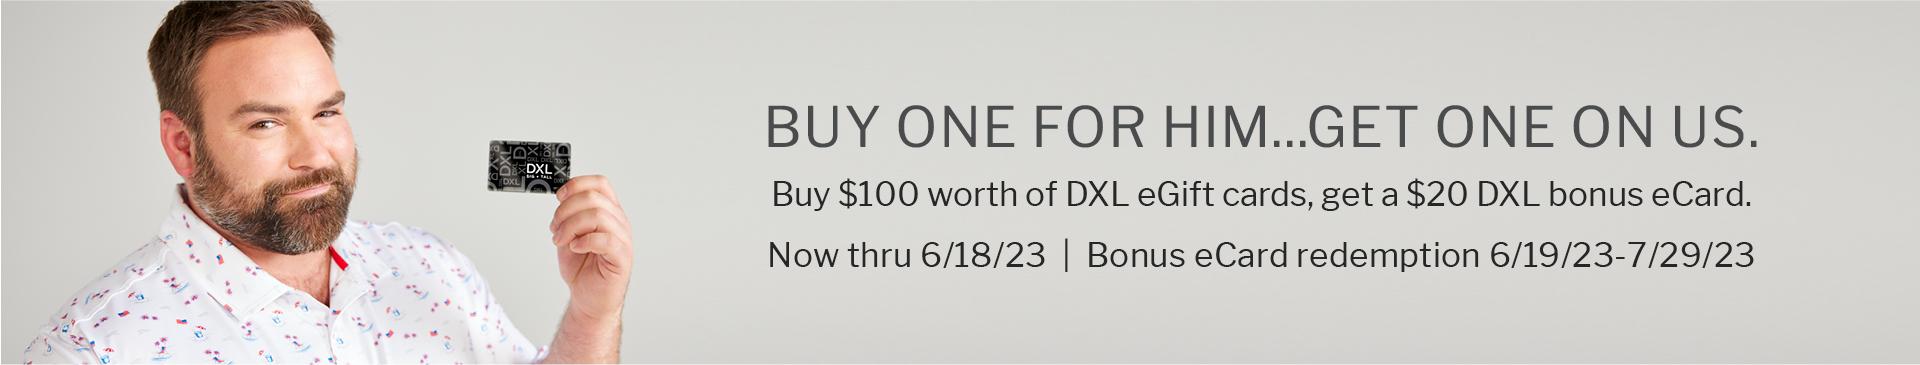 BUY ONE FOR HIM...GET ONE ON US. | Buy $100 worth of DXL eGift cards, get a $20 DXL bonus eCard | Now thru 6/18/23 | Bonus eCard redemption 6/19/23-7/29/23